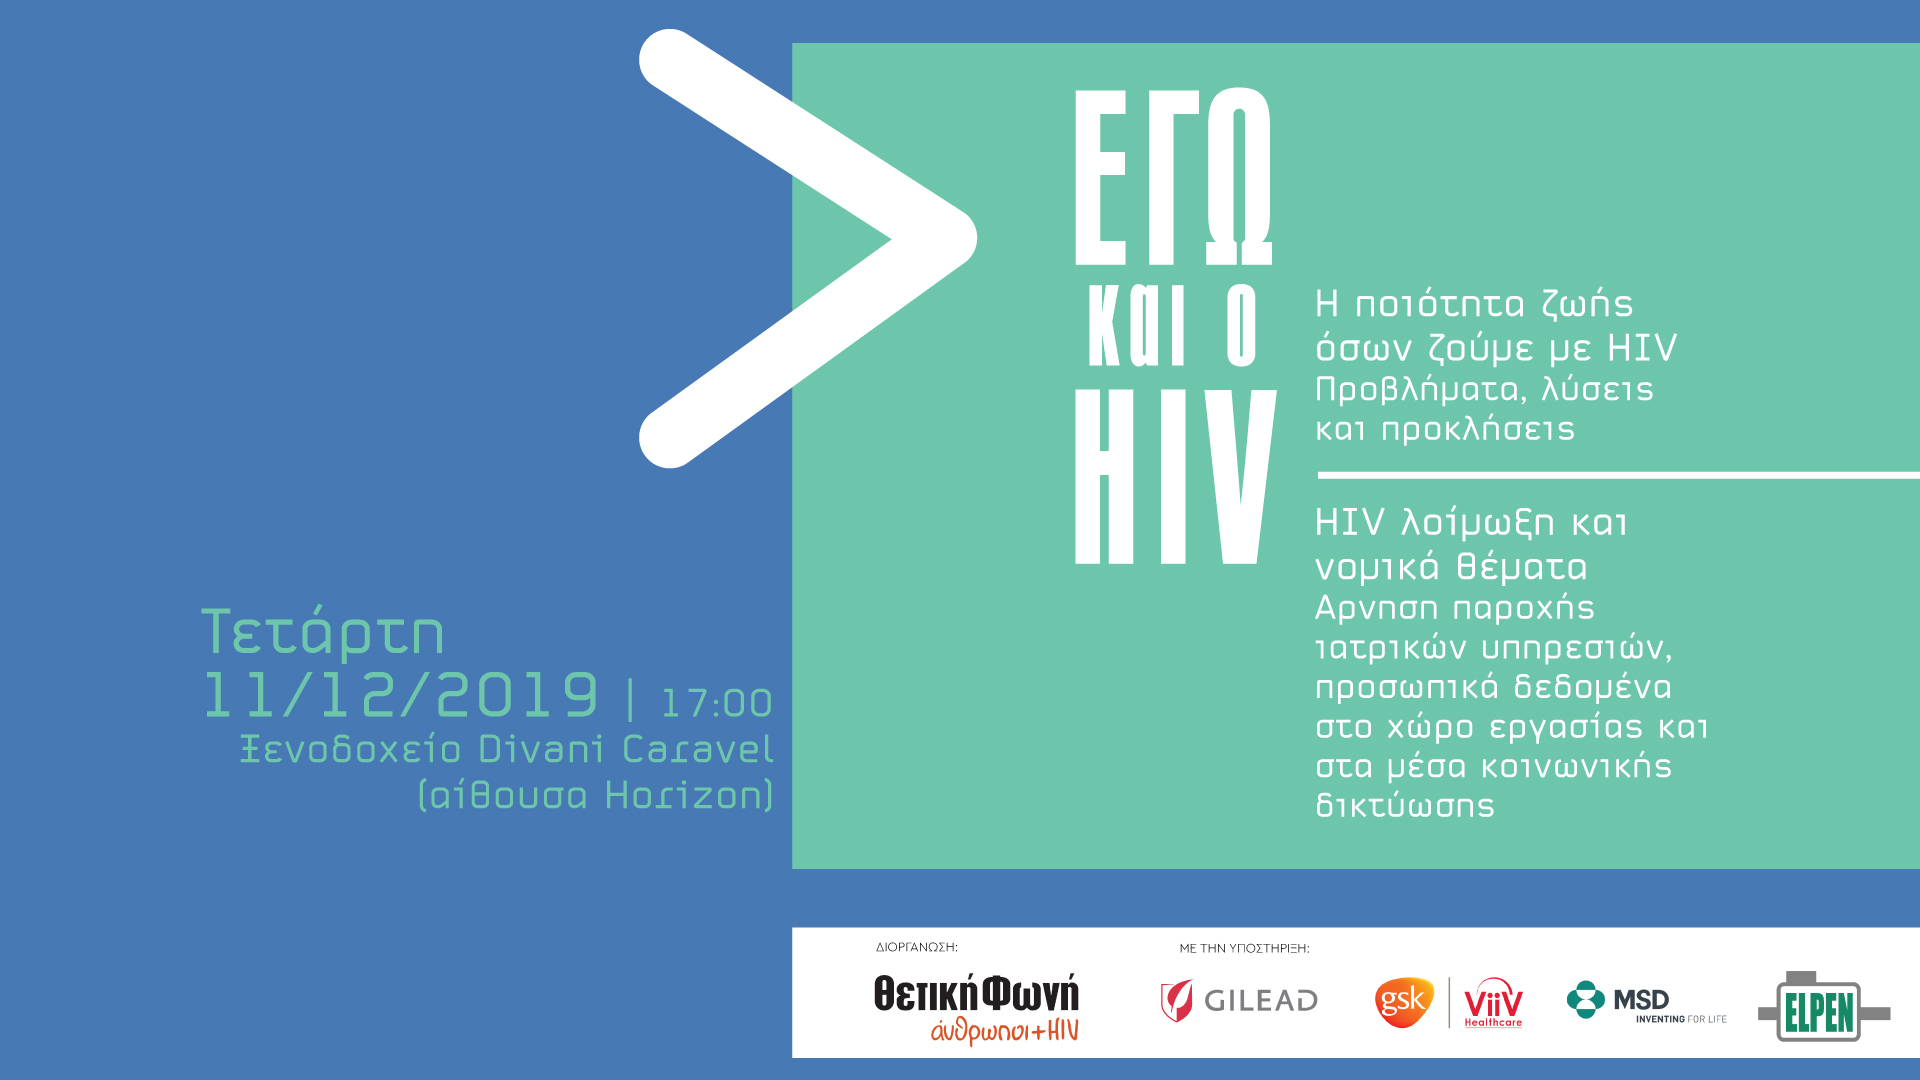 Featured image for “Εγώ και ο HIV | Τετάρτη 11/12 στις 17:00, στο Divani Caravel στην Αθήνα”